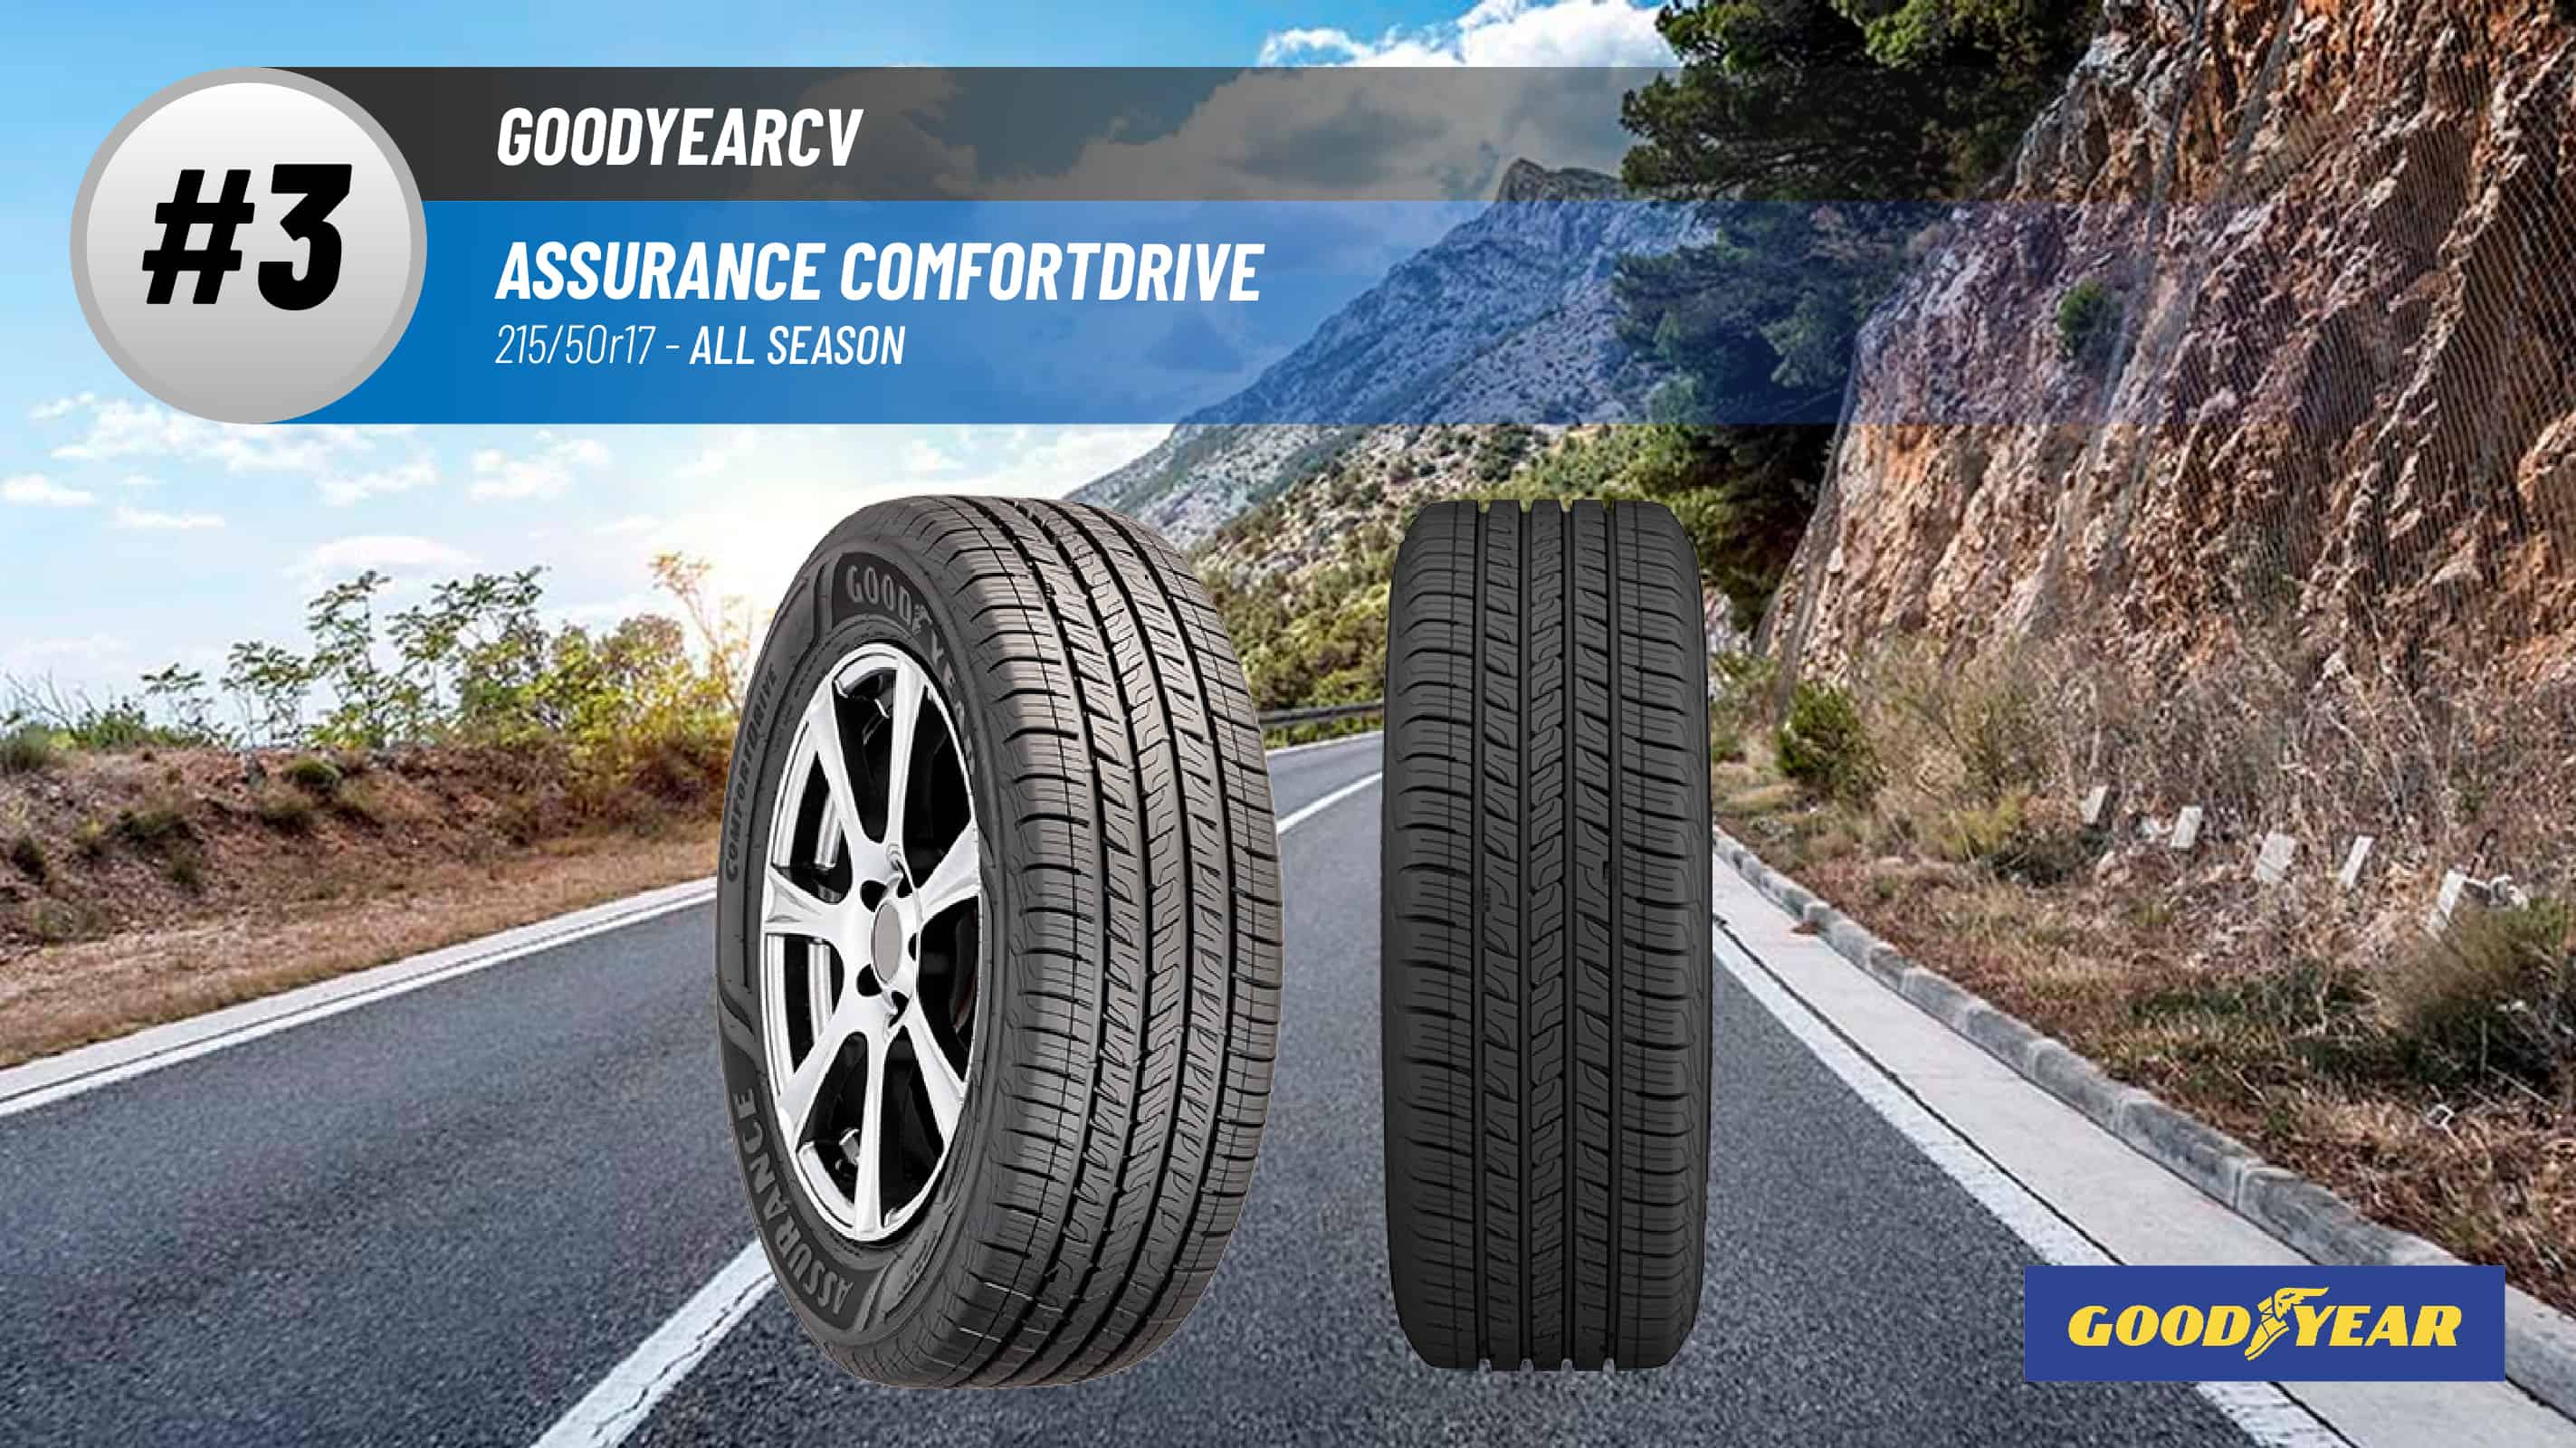 Top #3 All Season Tires: Goodyear Assurance Comfortdrive – best 215/50R17